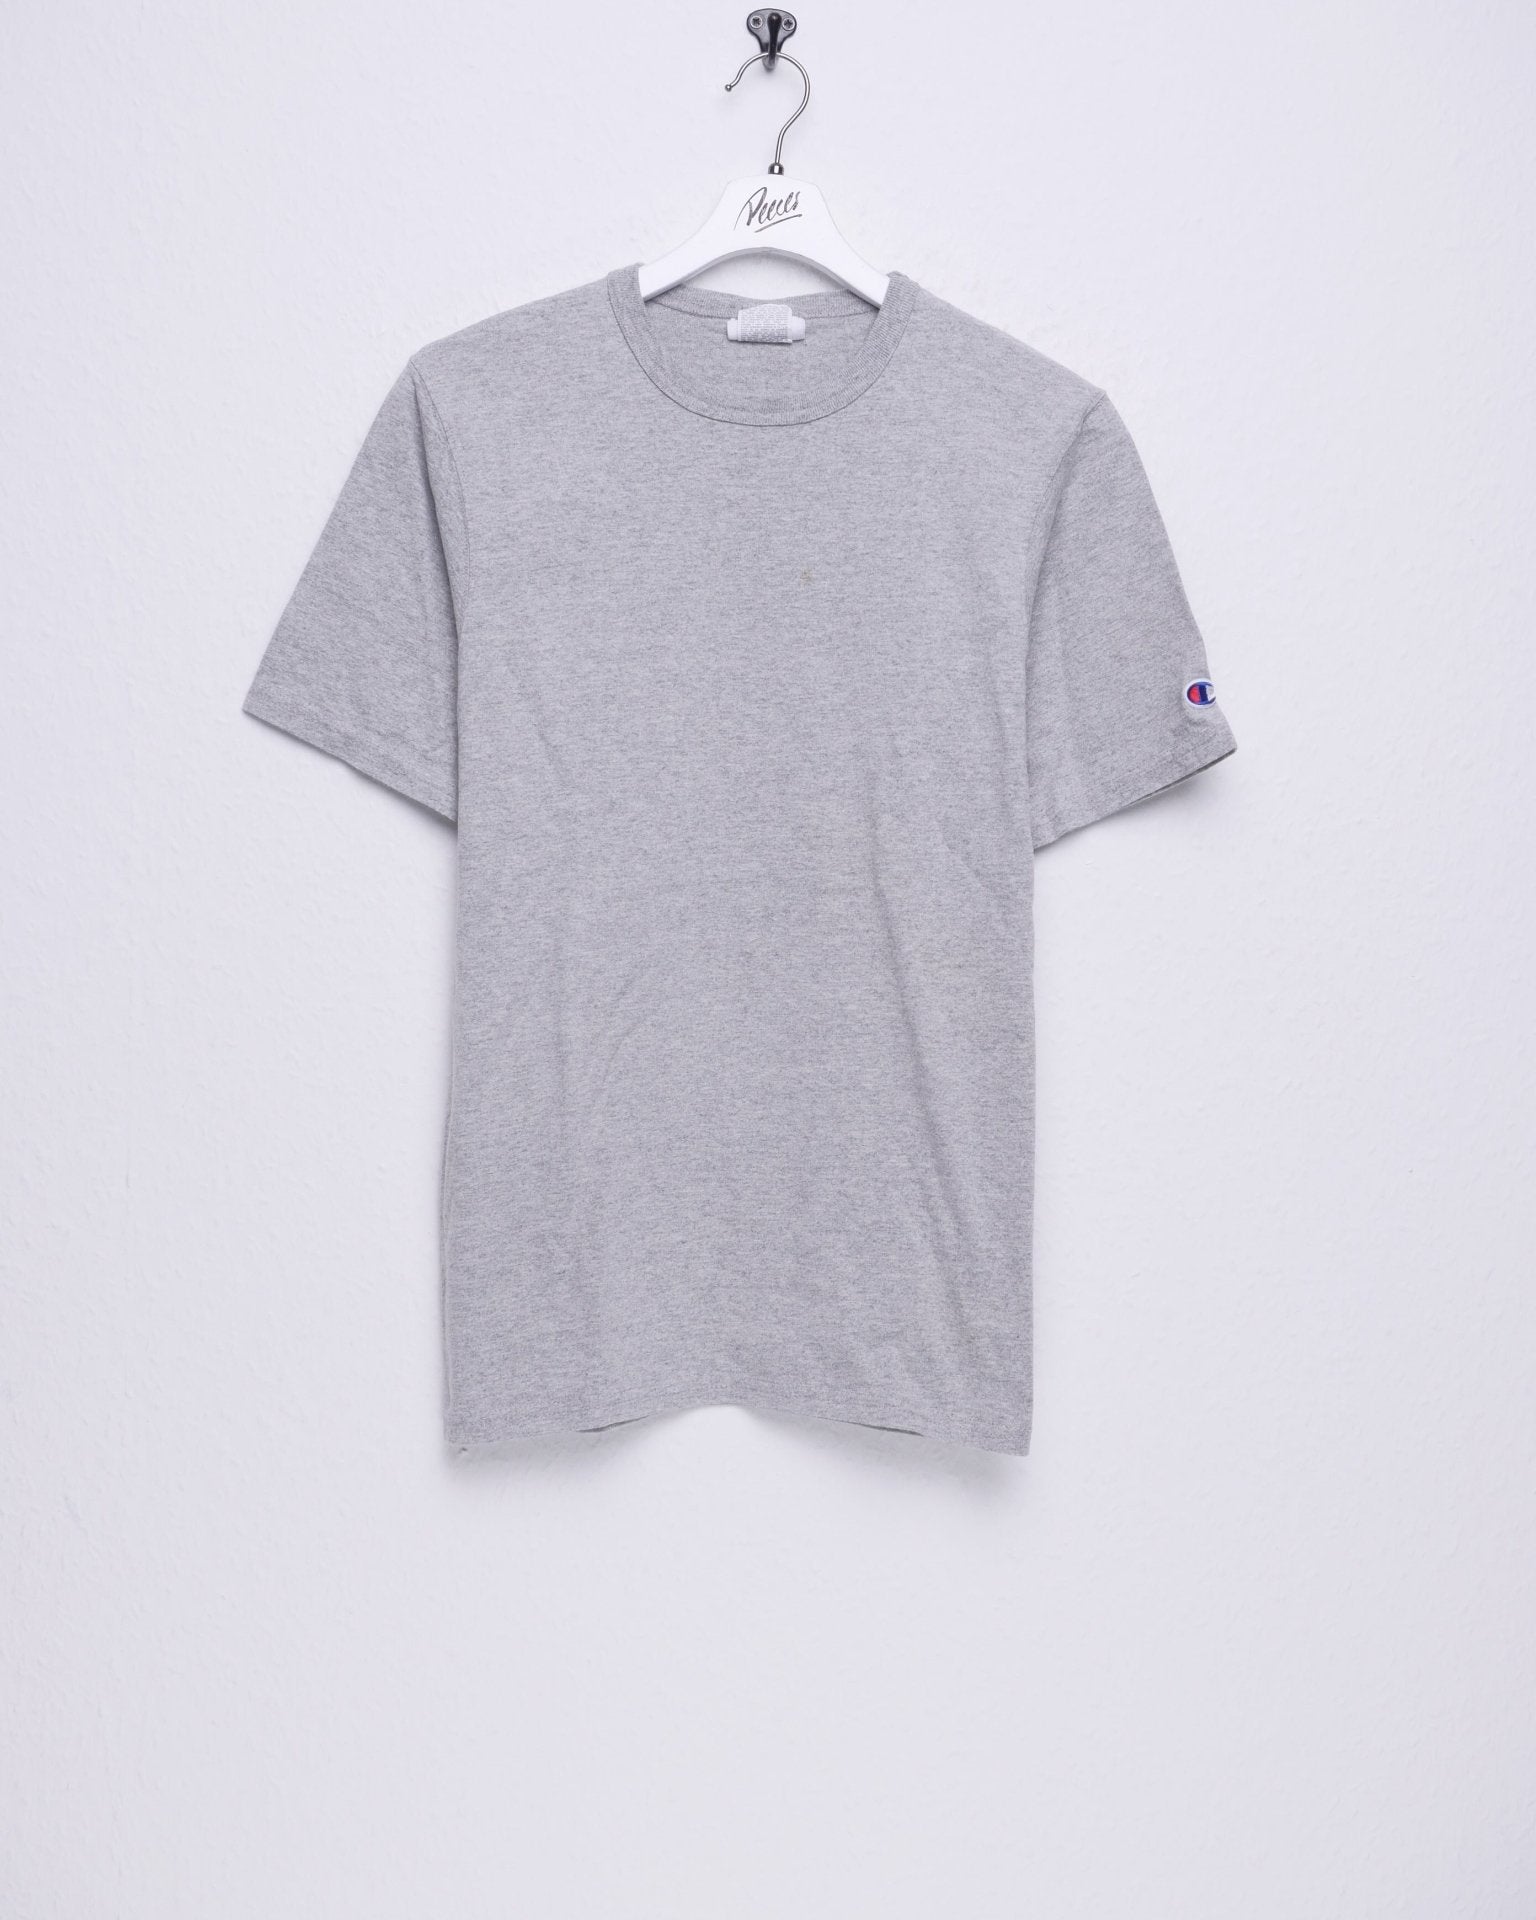 champion embroidered Logo basic grey Shirt - Peeces